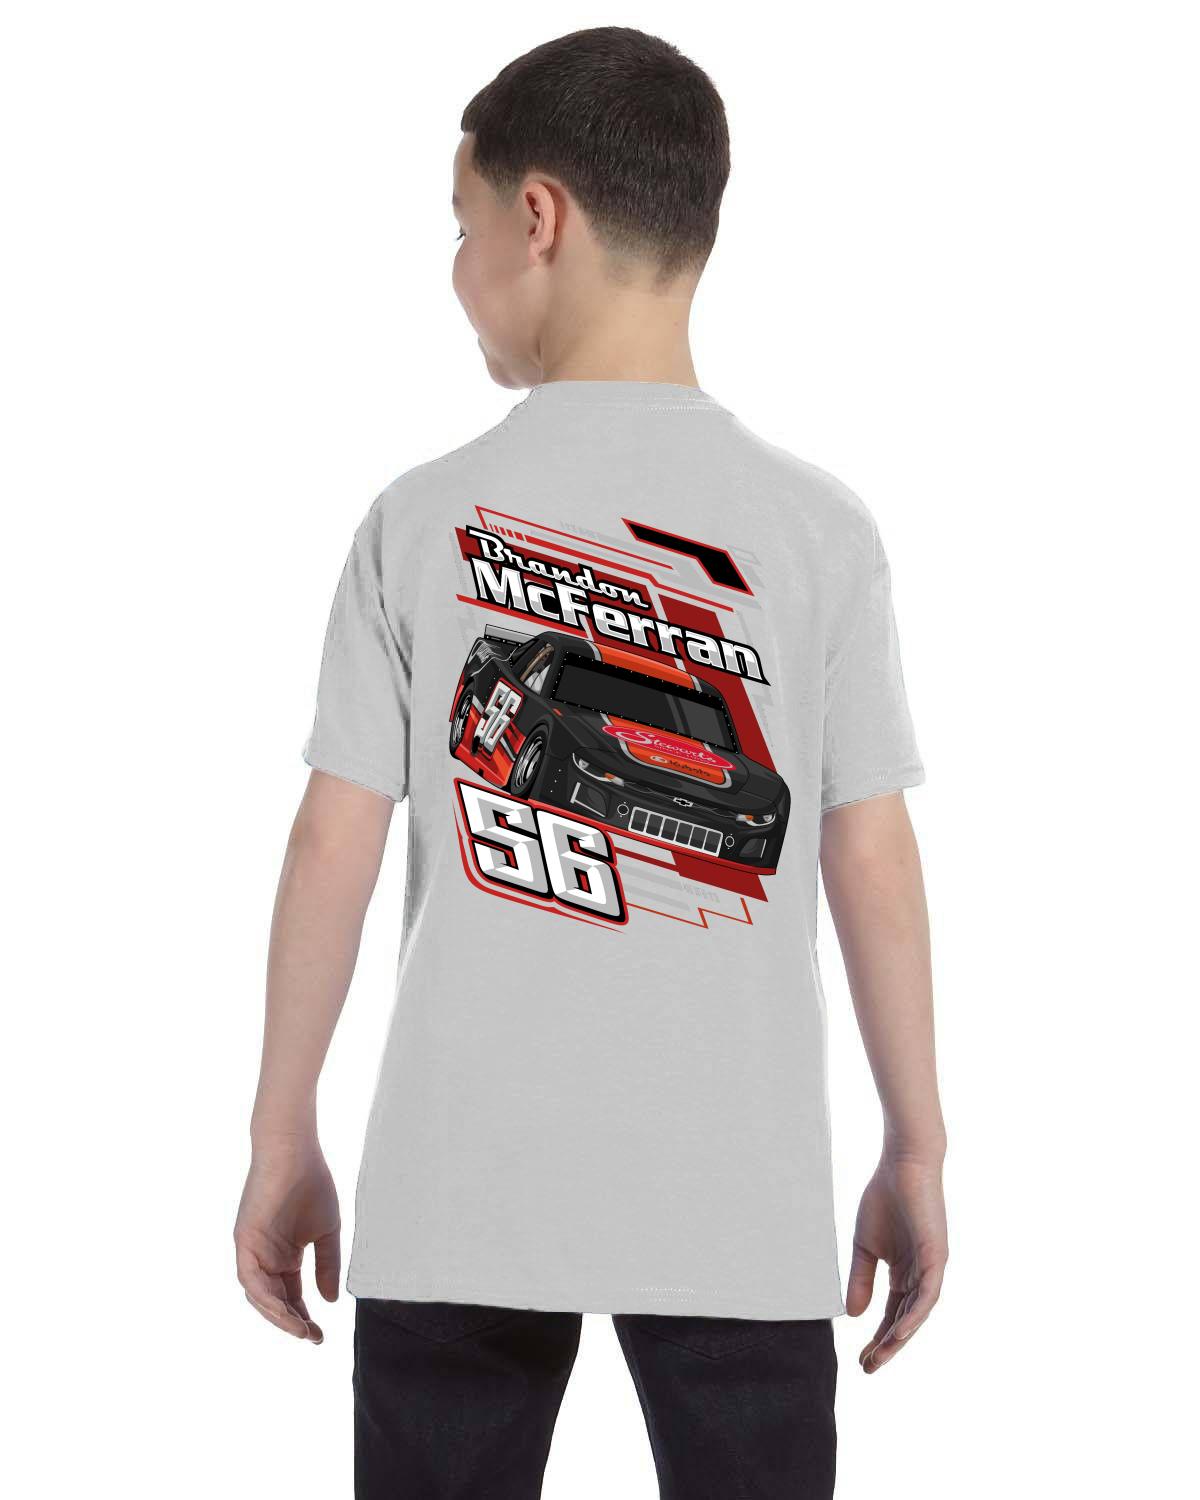 Brandon McFerran Racing Youth tshirt